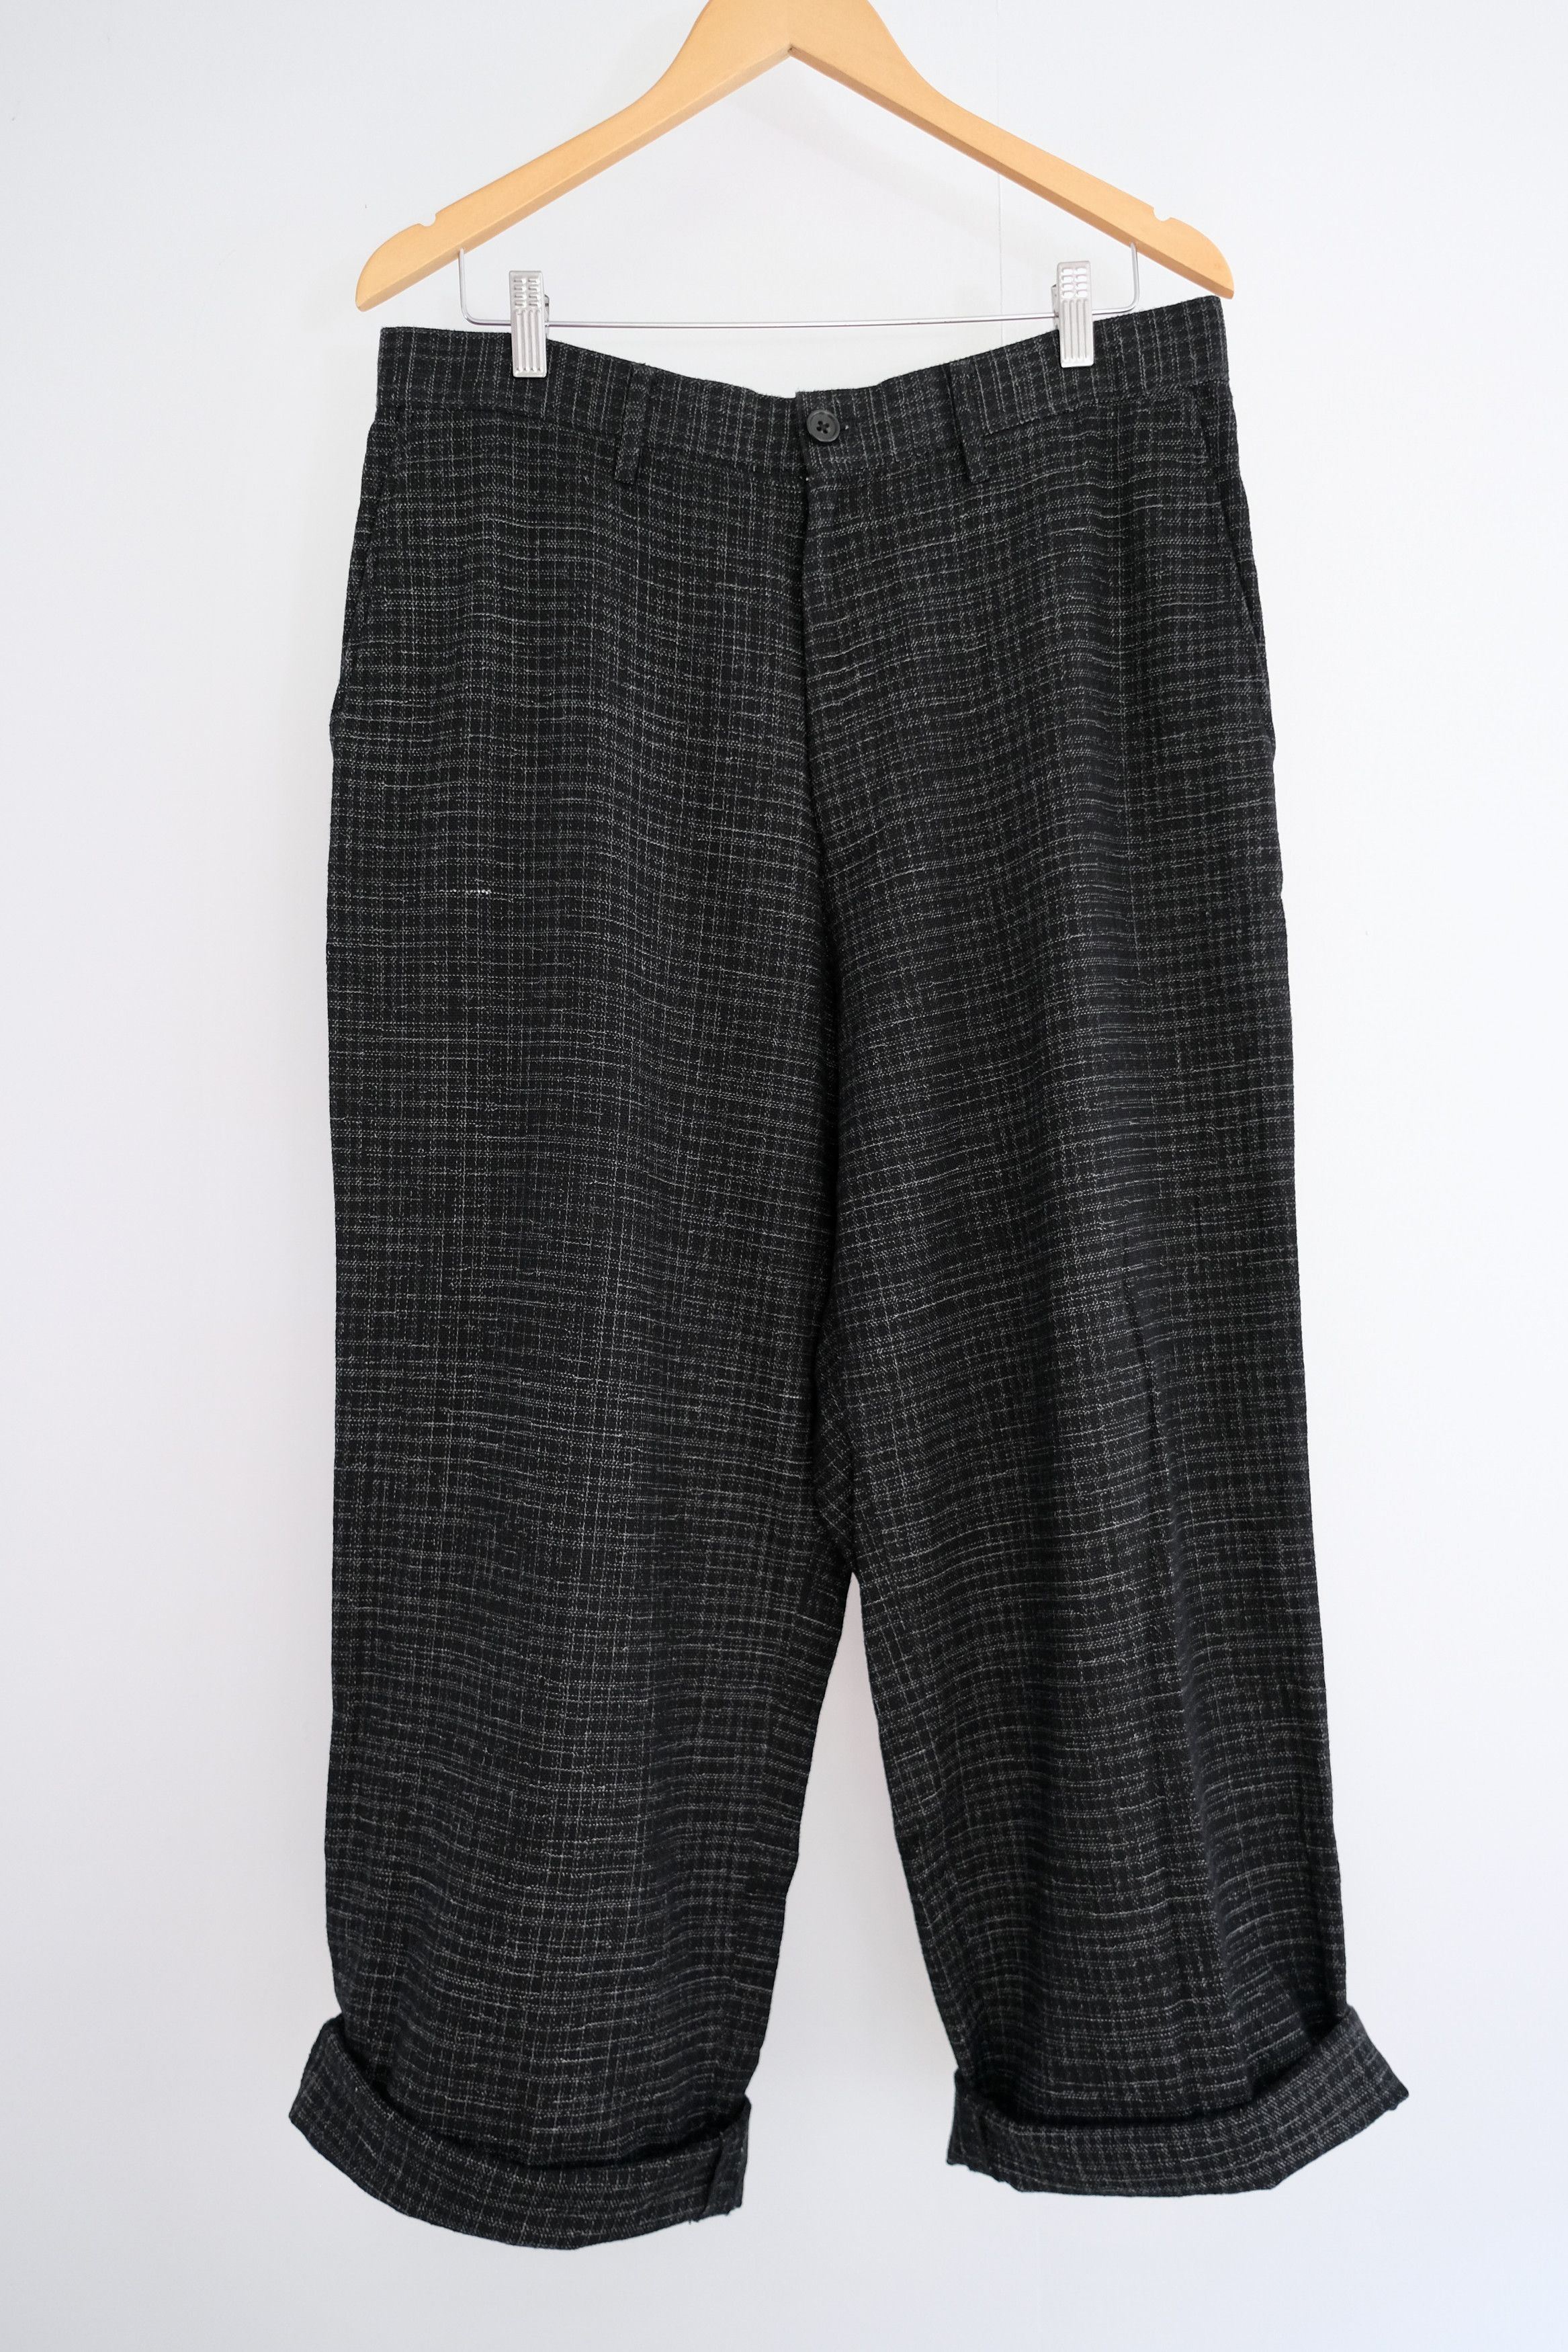 🎐 YFM [1990s] Wide Grid-Weave Pants - 1